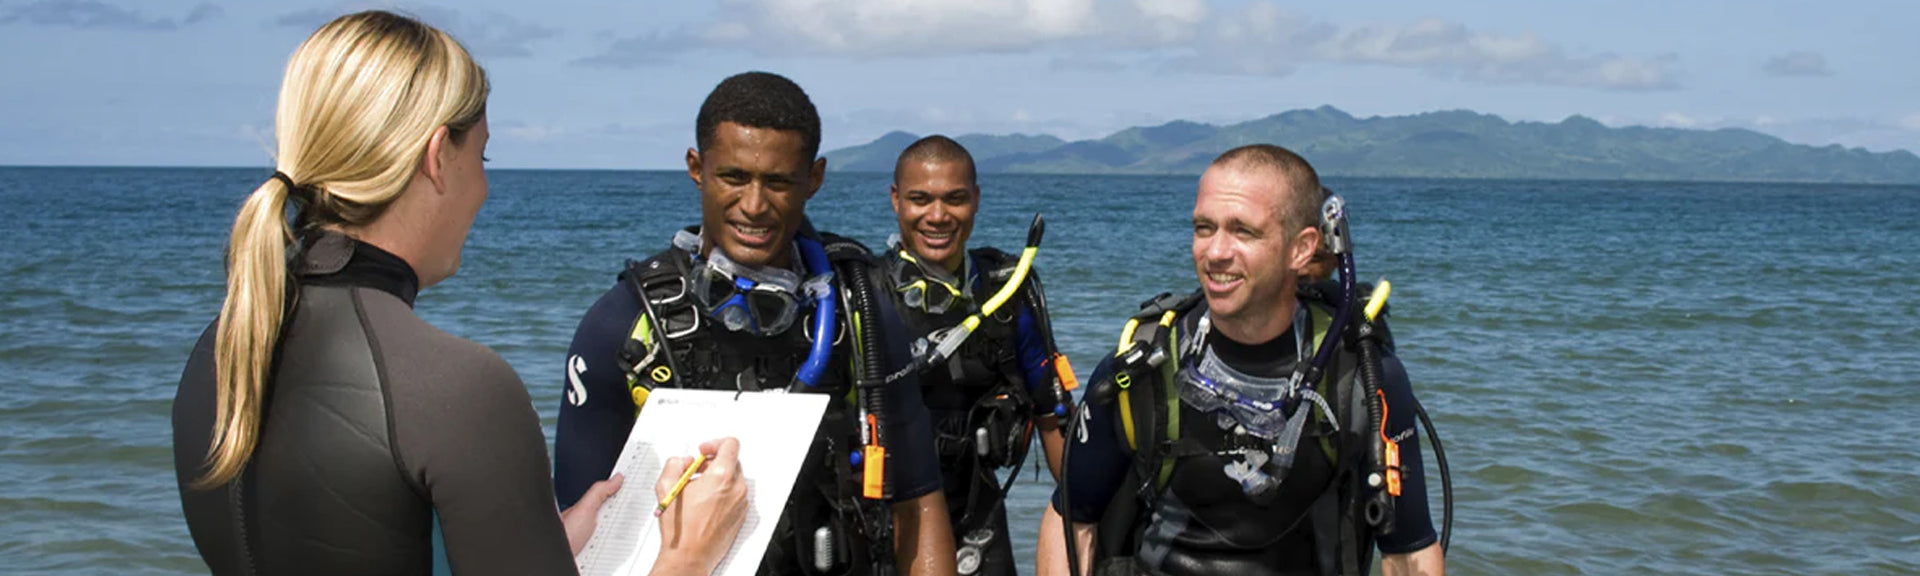 PADI Professional Dive Courses